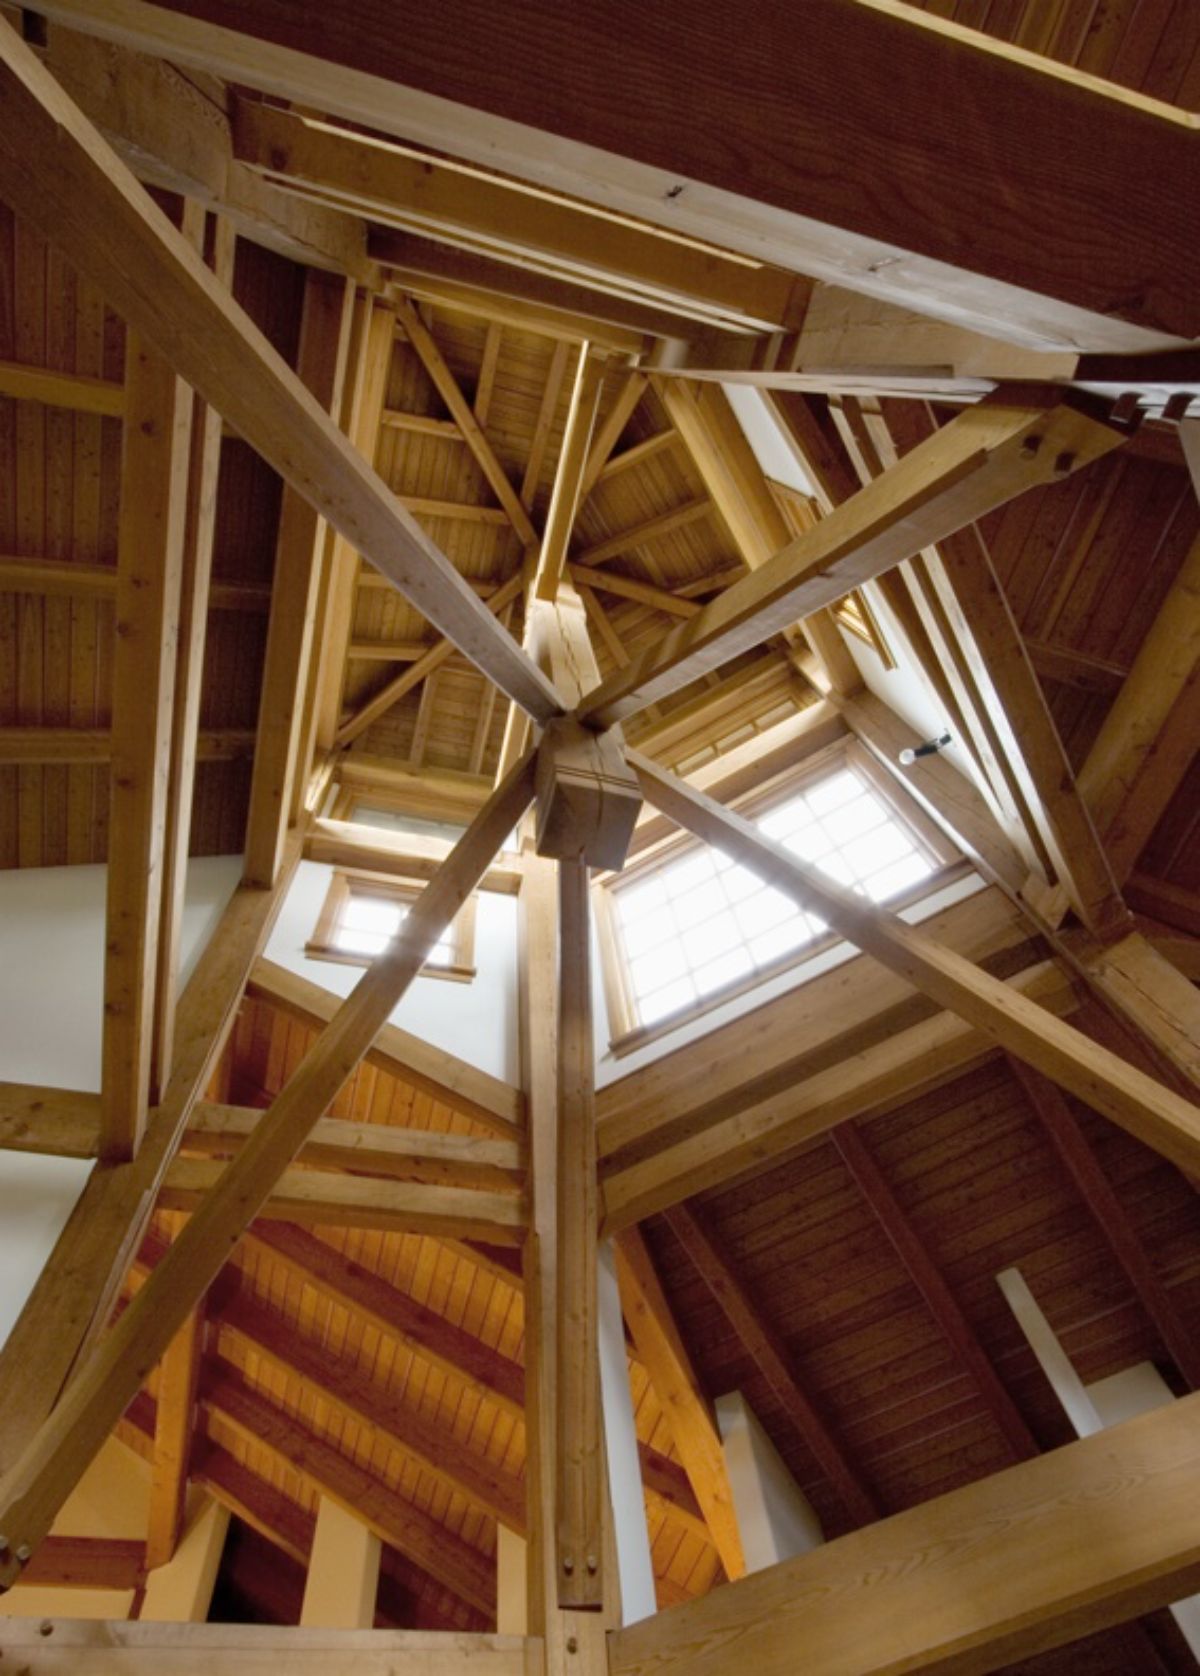 interior woodwork in log cabin showing open wood beams